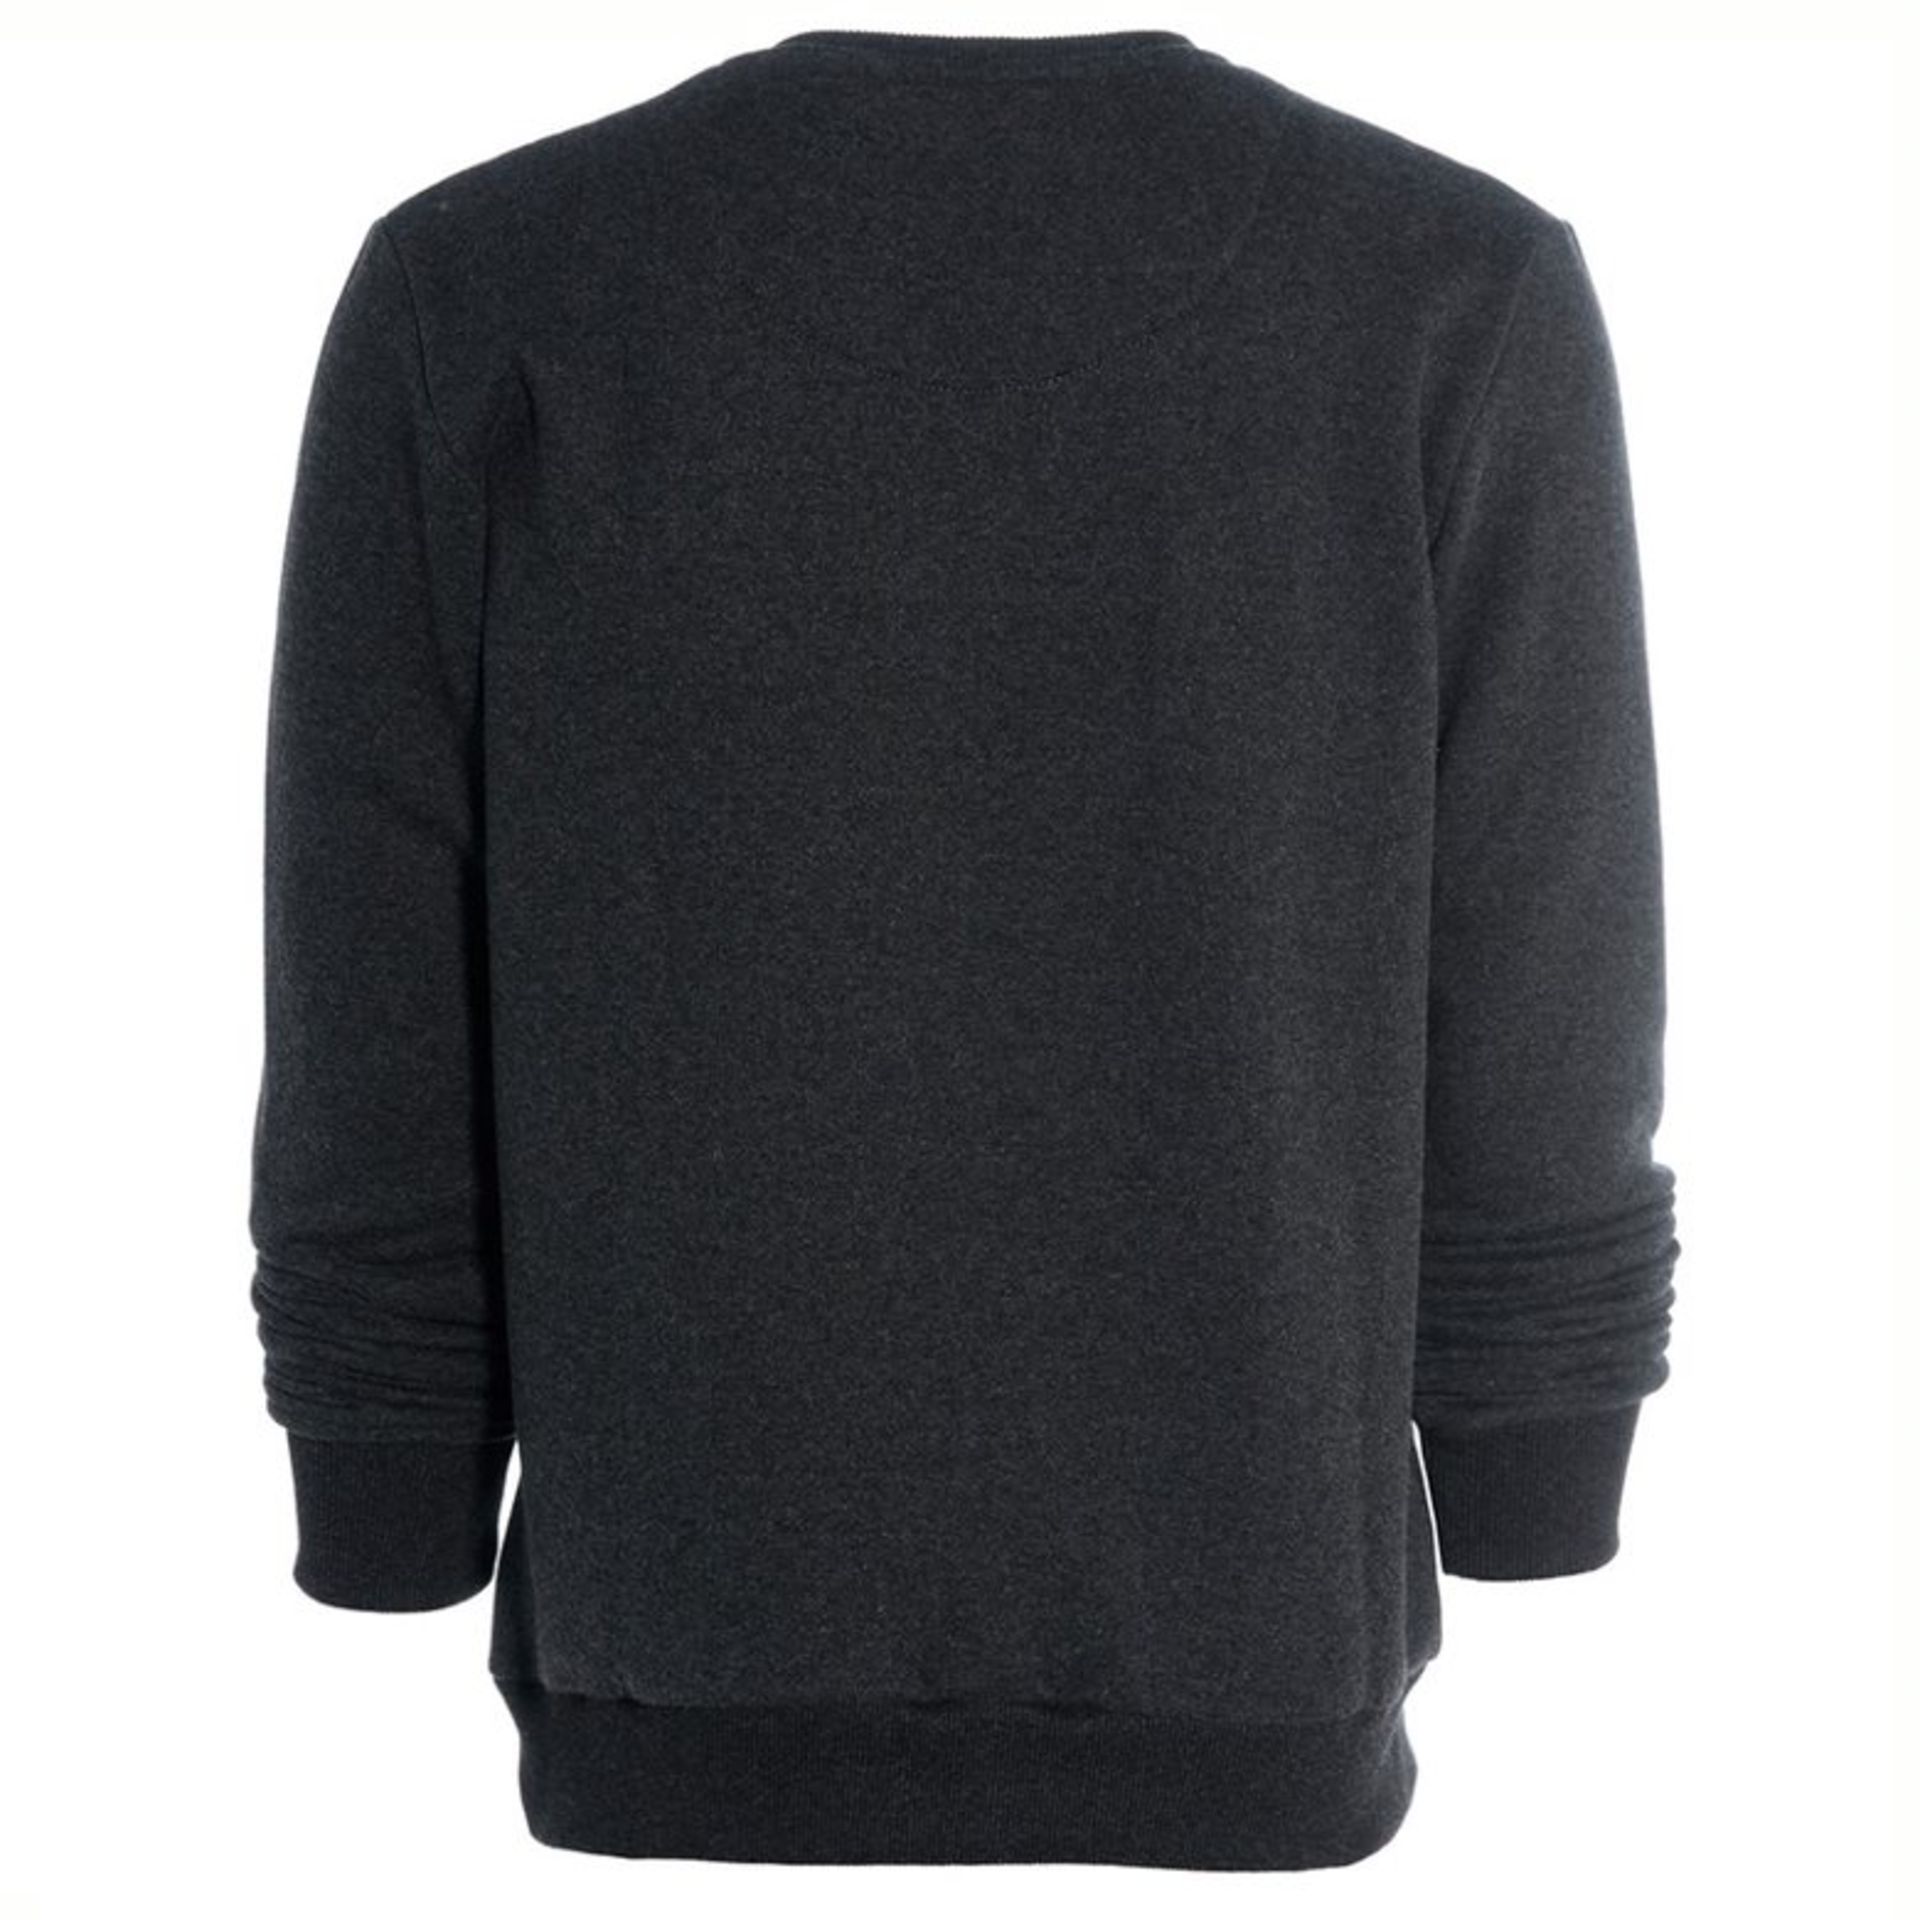 Criminal Damage Men's Sweater - Image 2 of 2